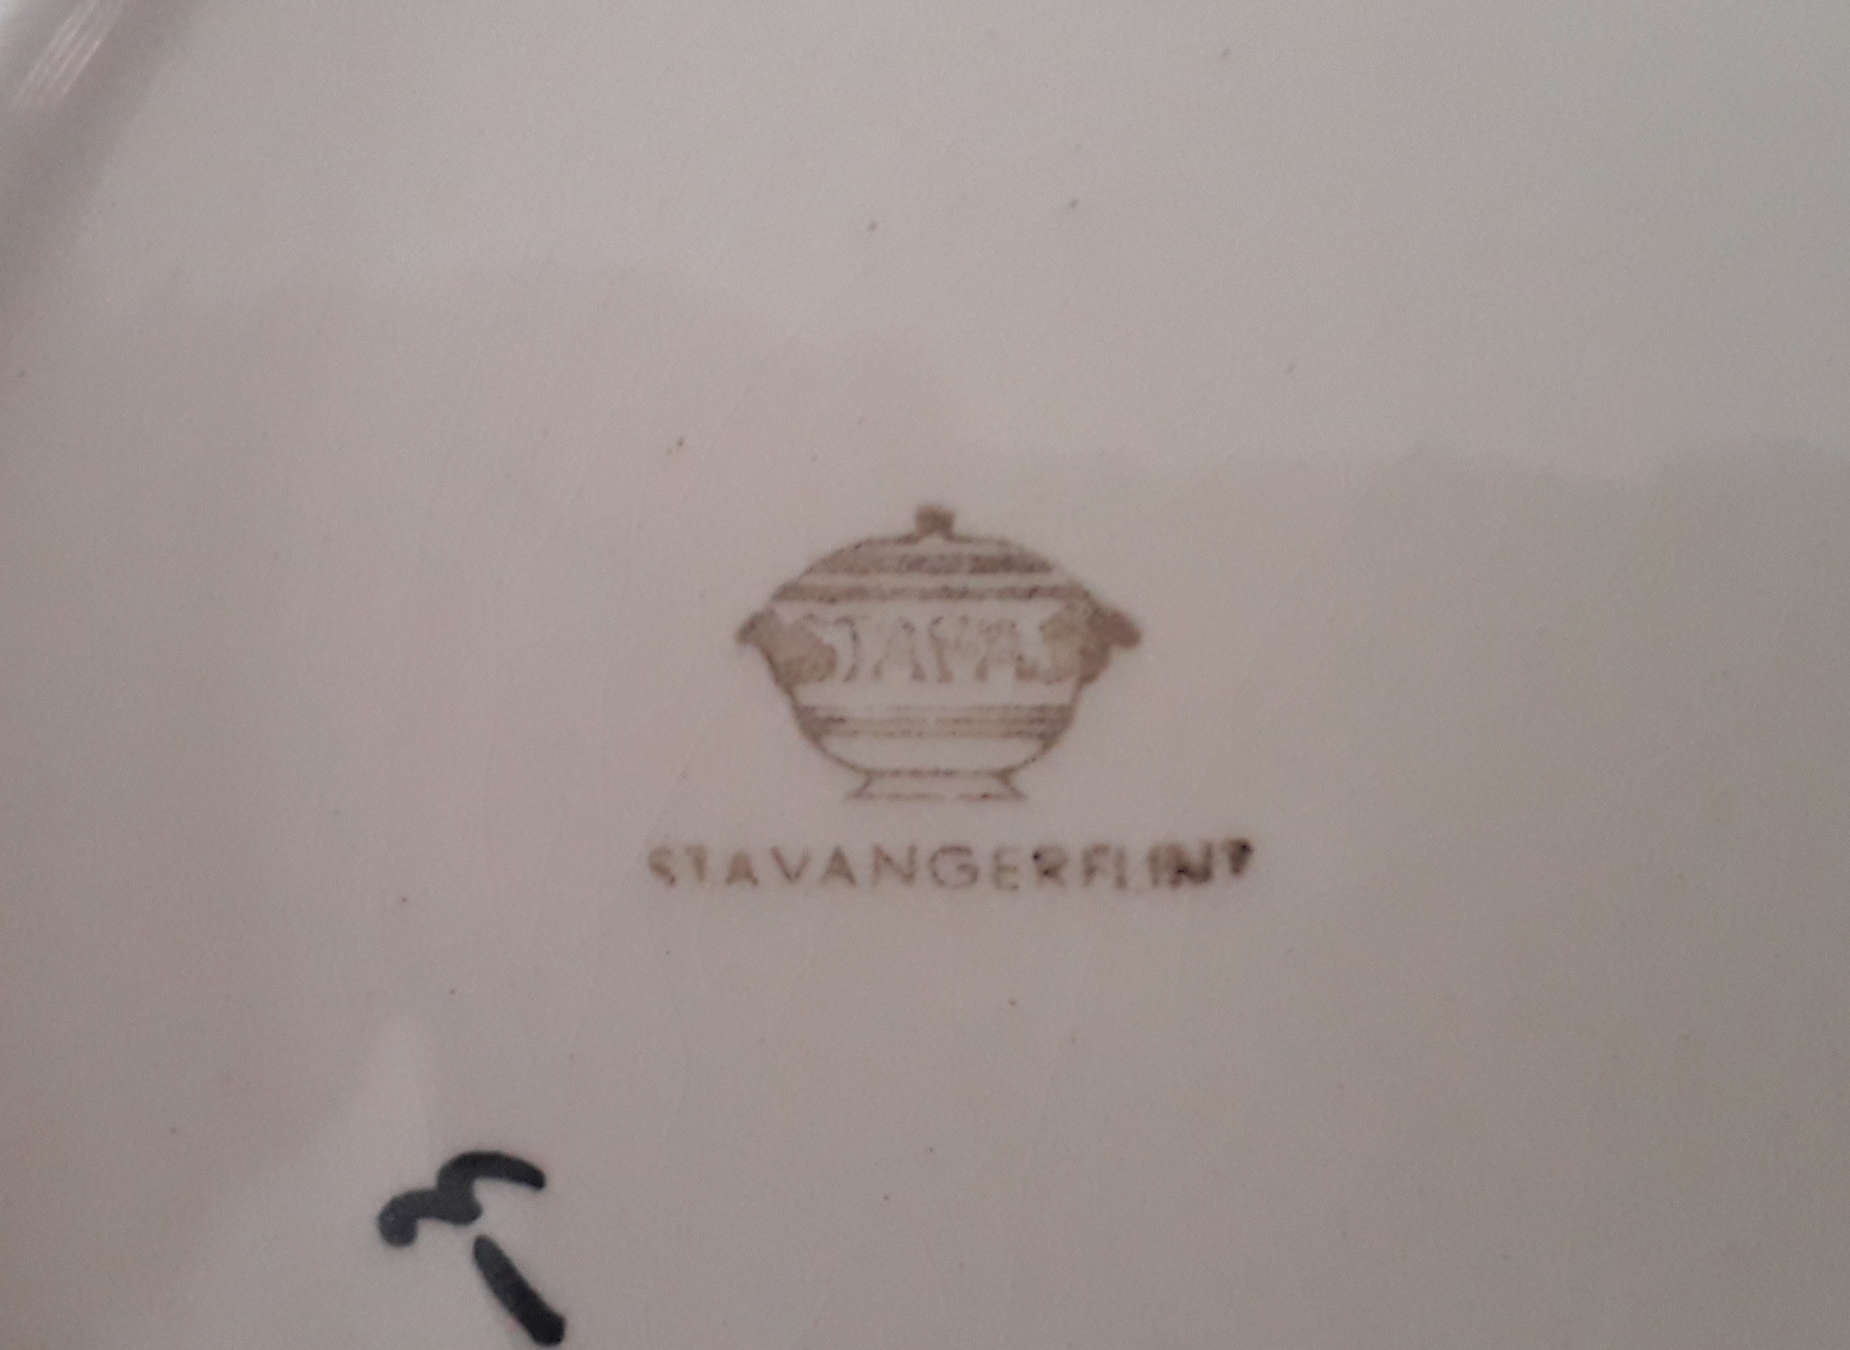 Stavangerflint mark, Stavanger, Norway, year from 1949 to 1951